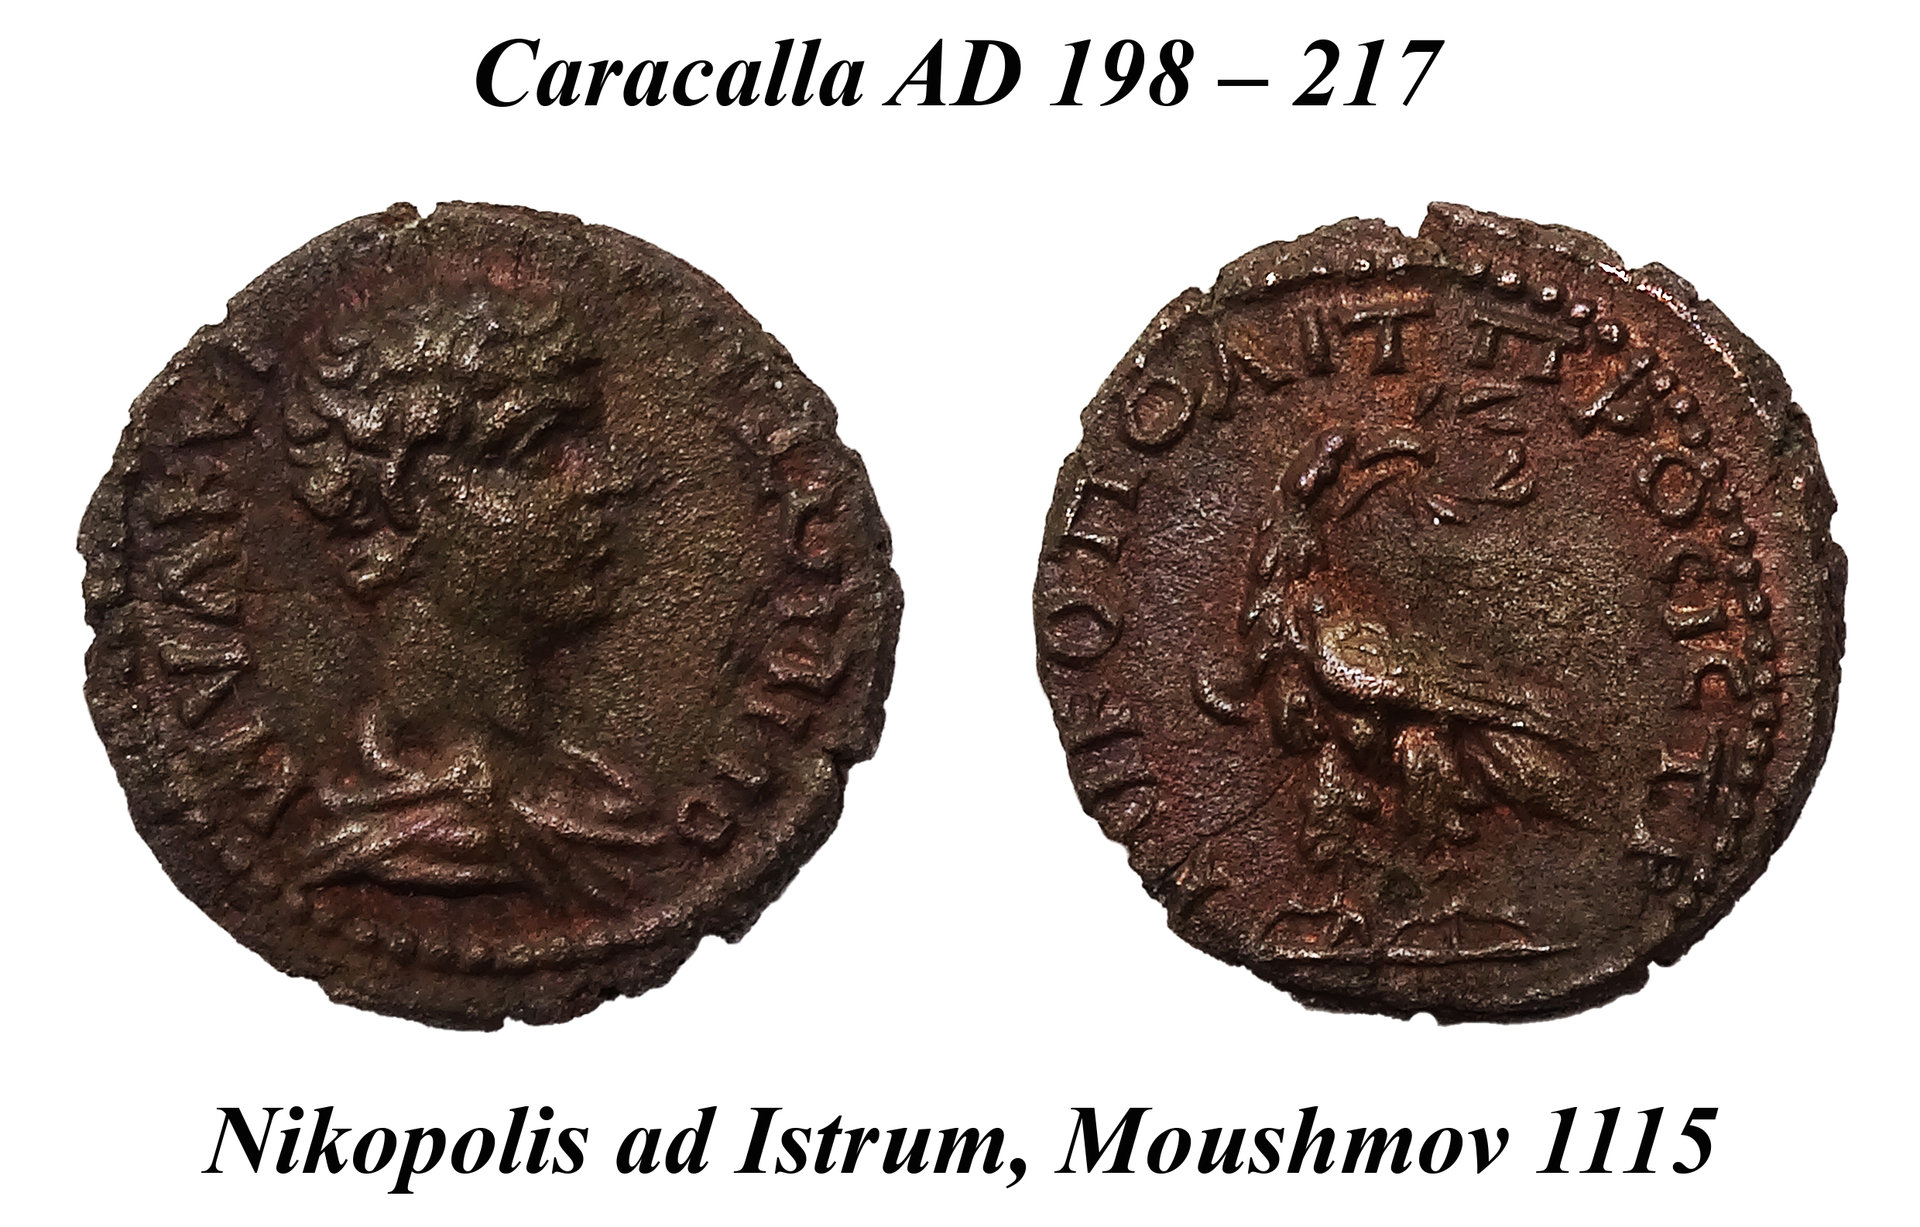 36b Caracalla, Nikopolis ad Istrum, Moushmov 1115.jpg